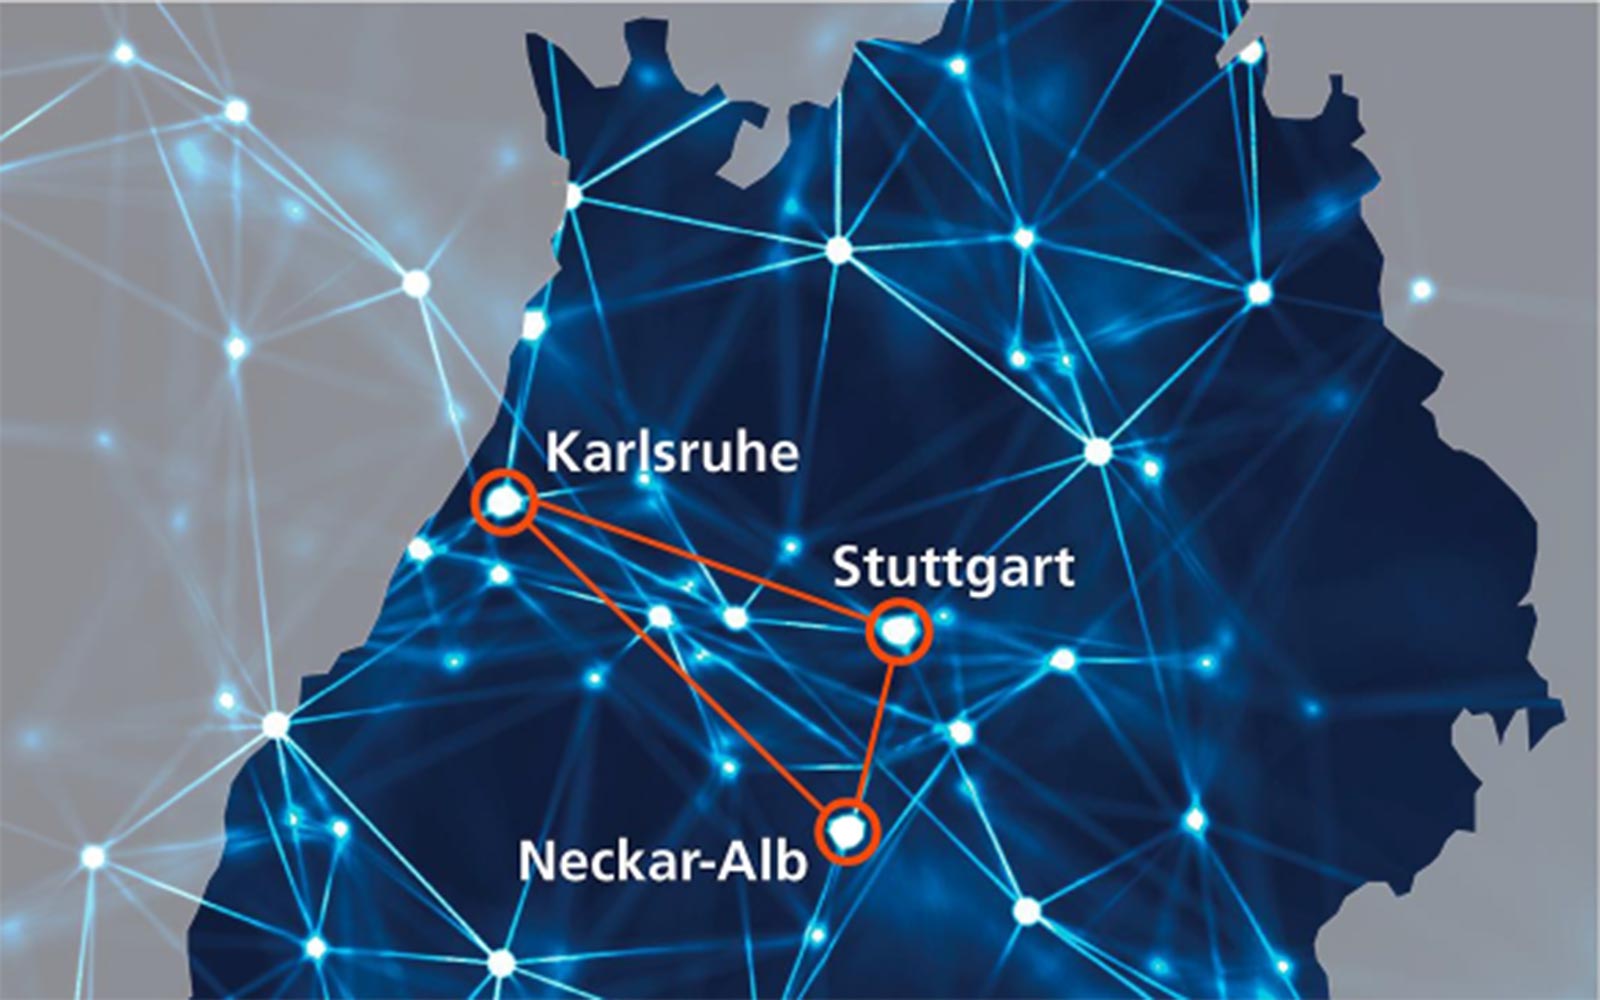 Vernetzte Orte im Zusammenhang mit dem KI-Innovationspark Karlsruhe, Stuttgart, Neckar-Alb